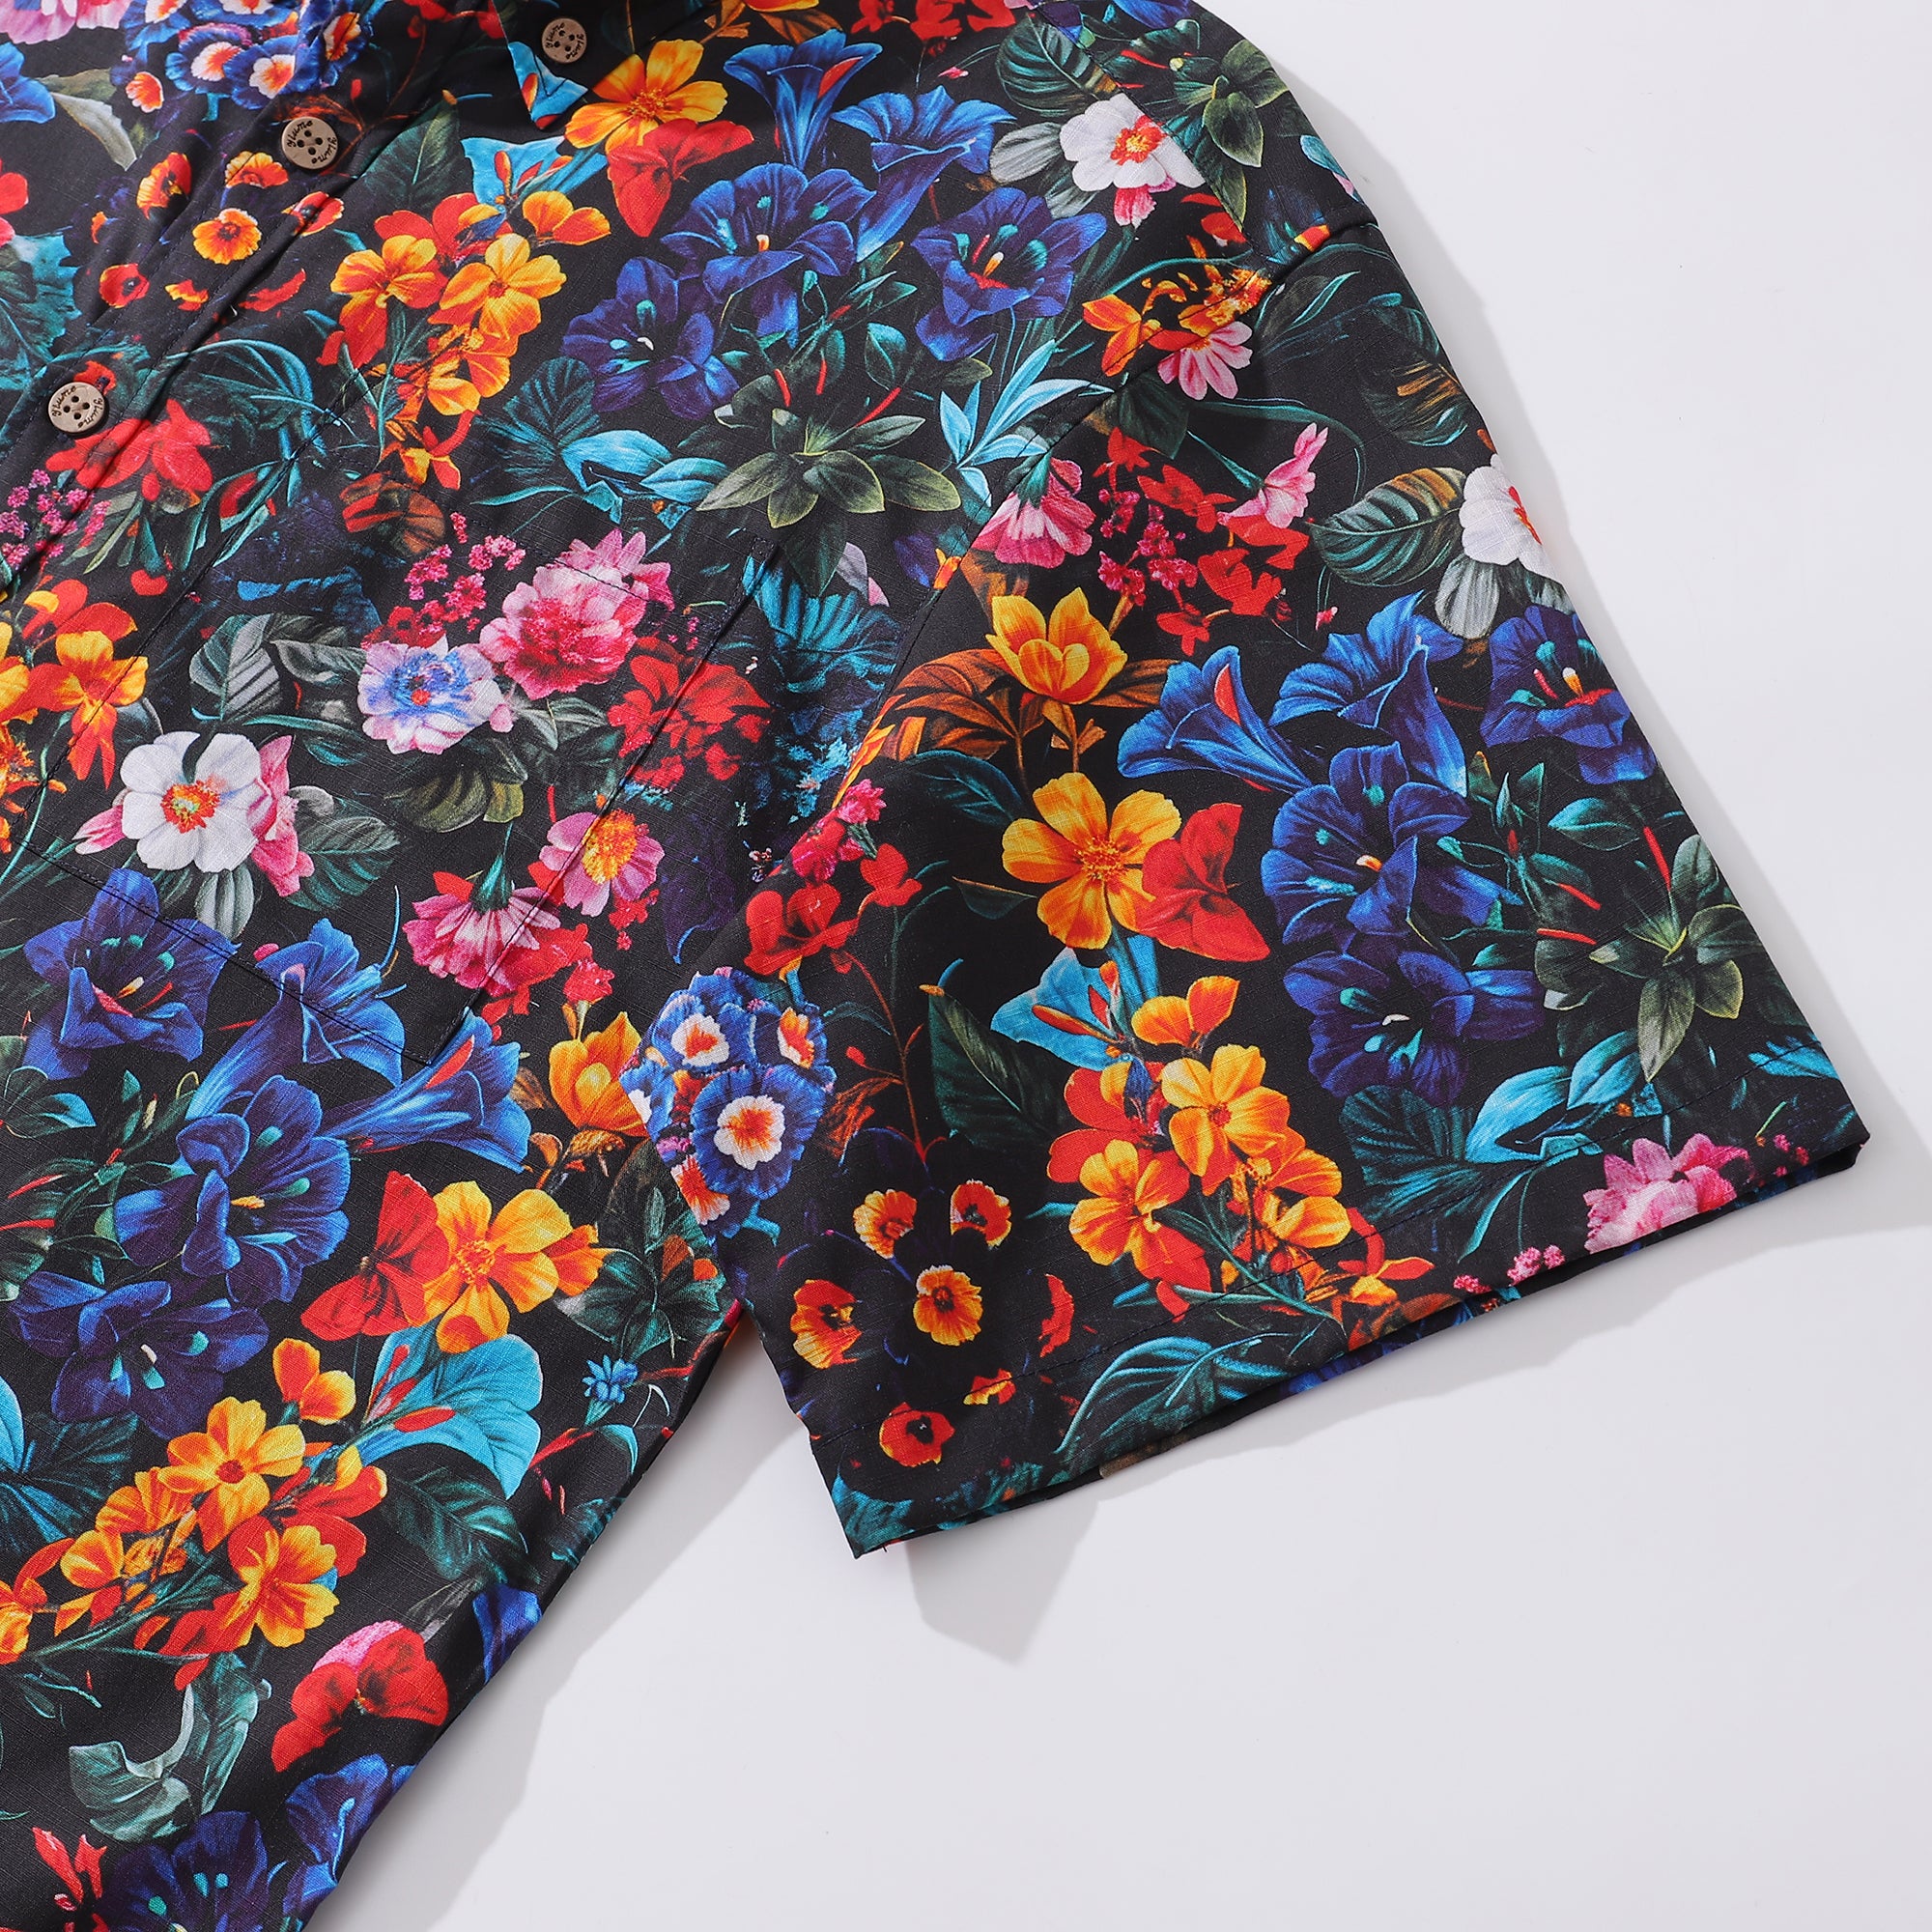 Mens Floral Hawaiian Shirt Tropical Button-down Short Sleeve 100% Cotton Shirt